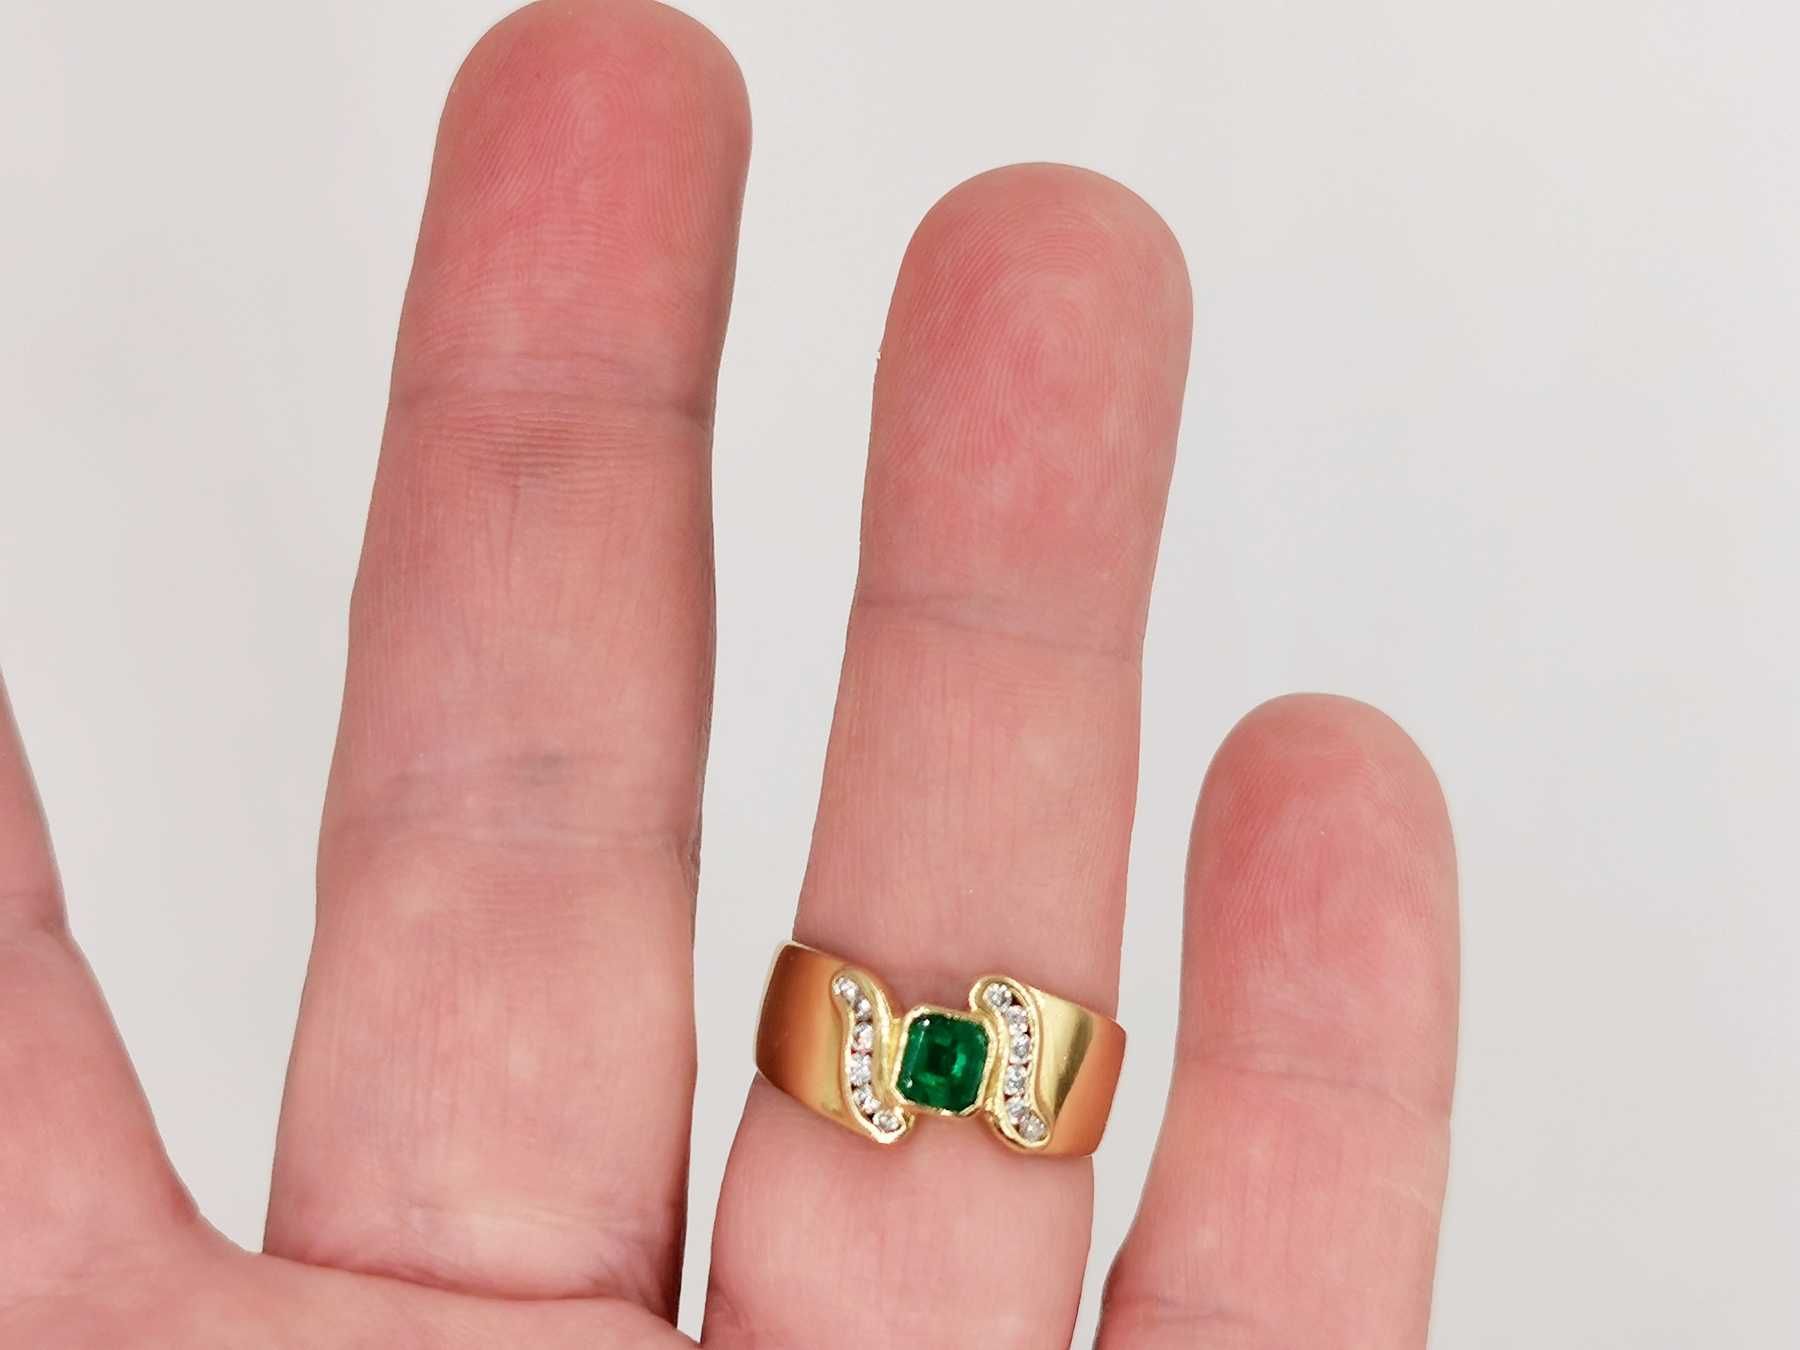 pierścionek złoto 18K 750 szmaragd 0,38 ct diamenty 3,73 g certyfikat